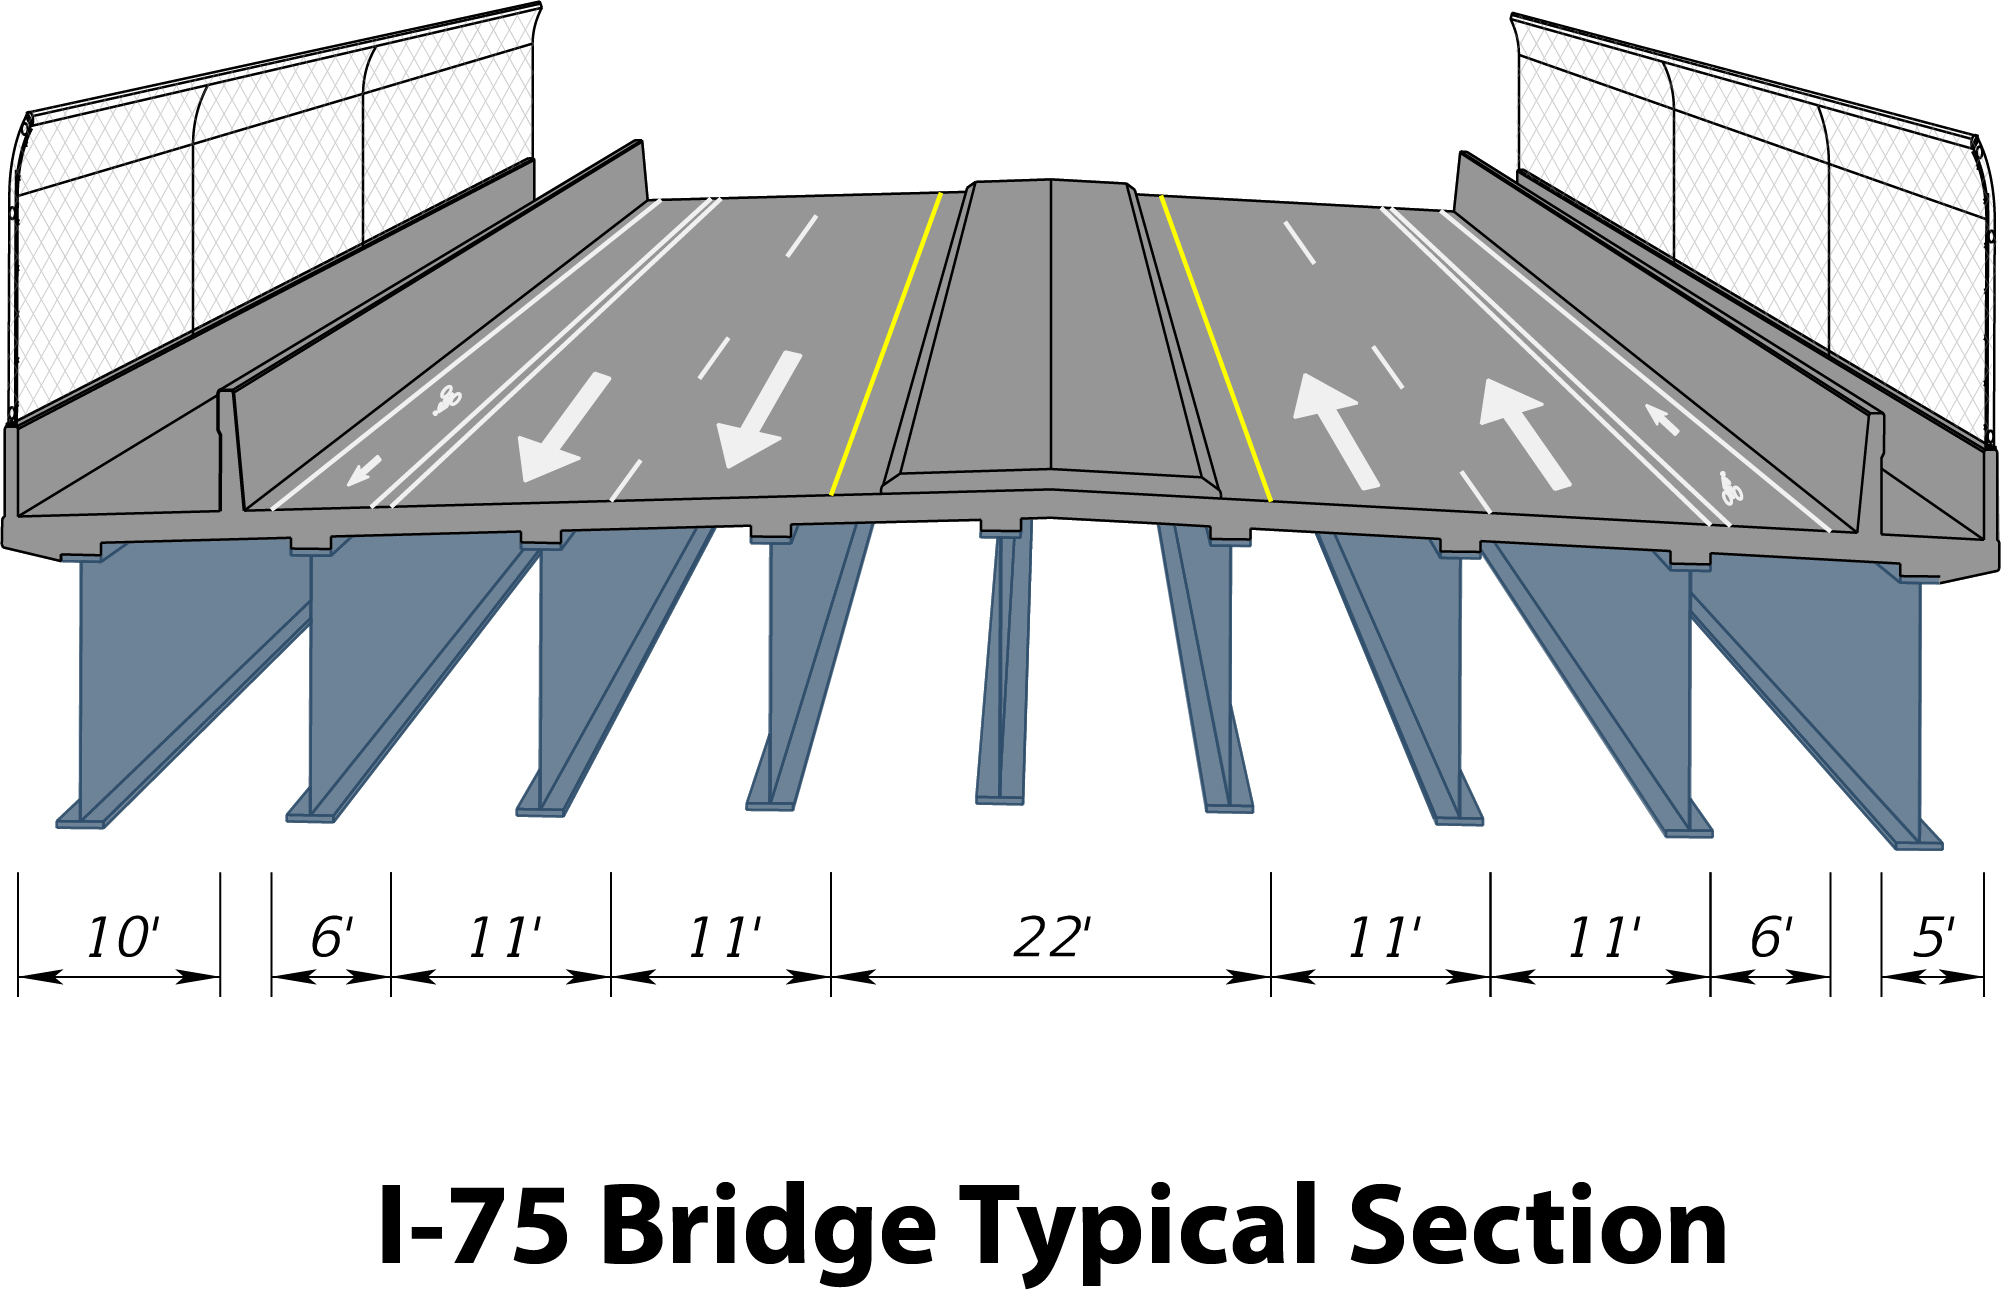 I-75 bridge typical section